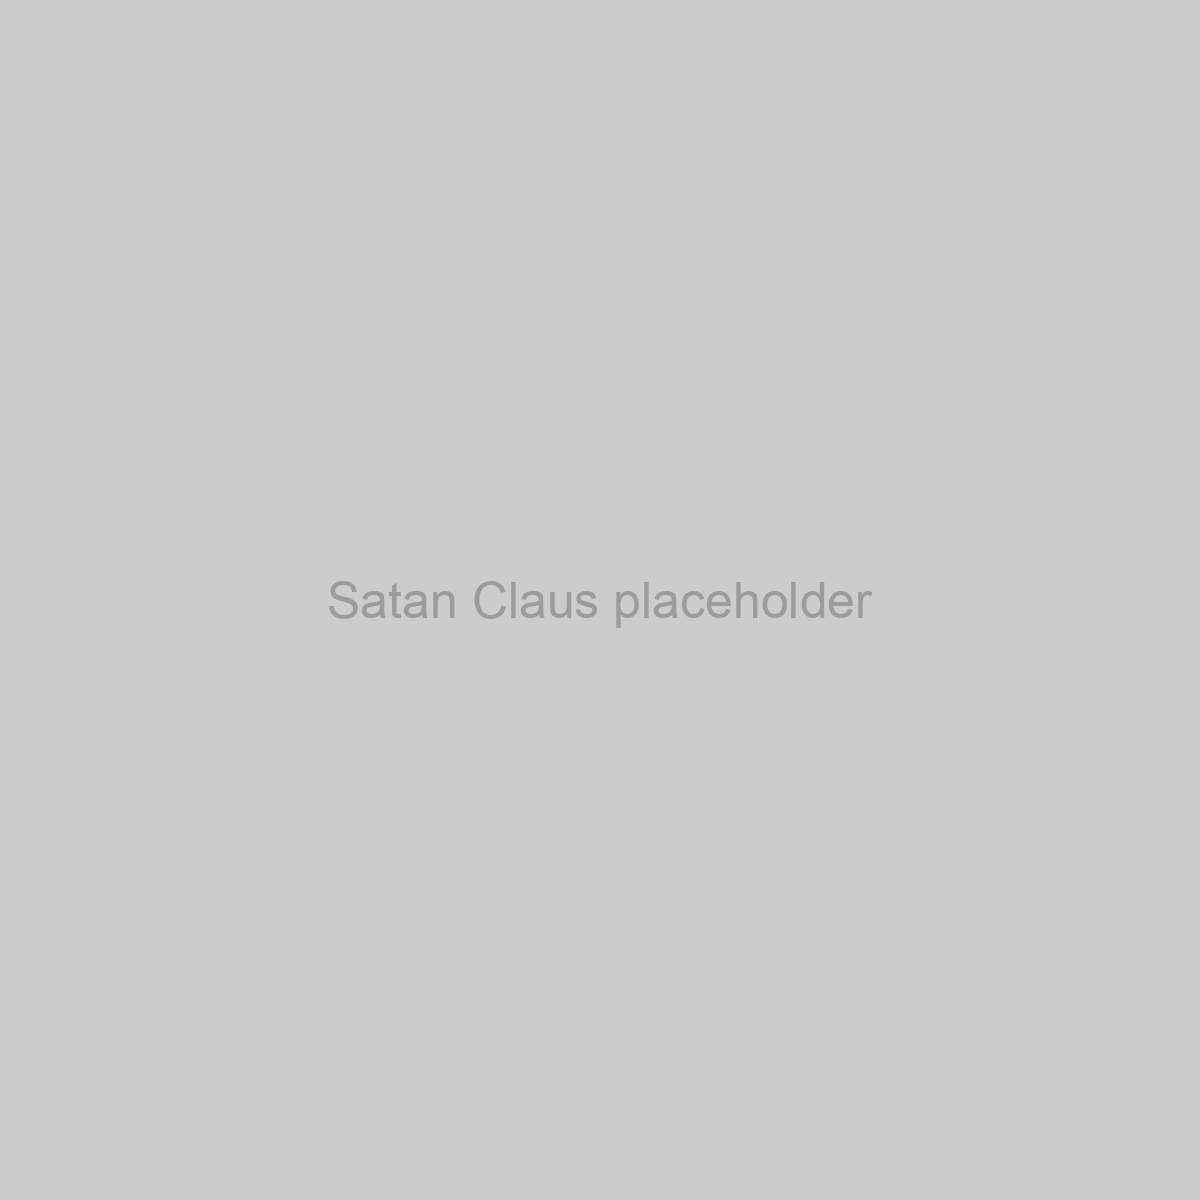 Satan Claus Placeholder Image